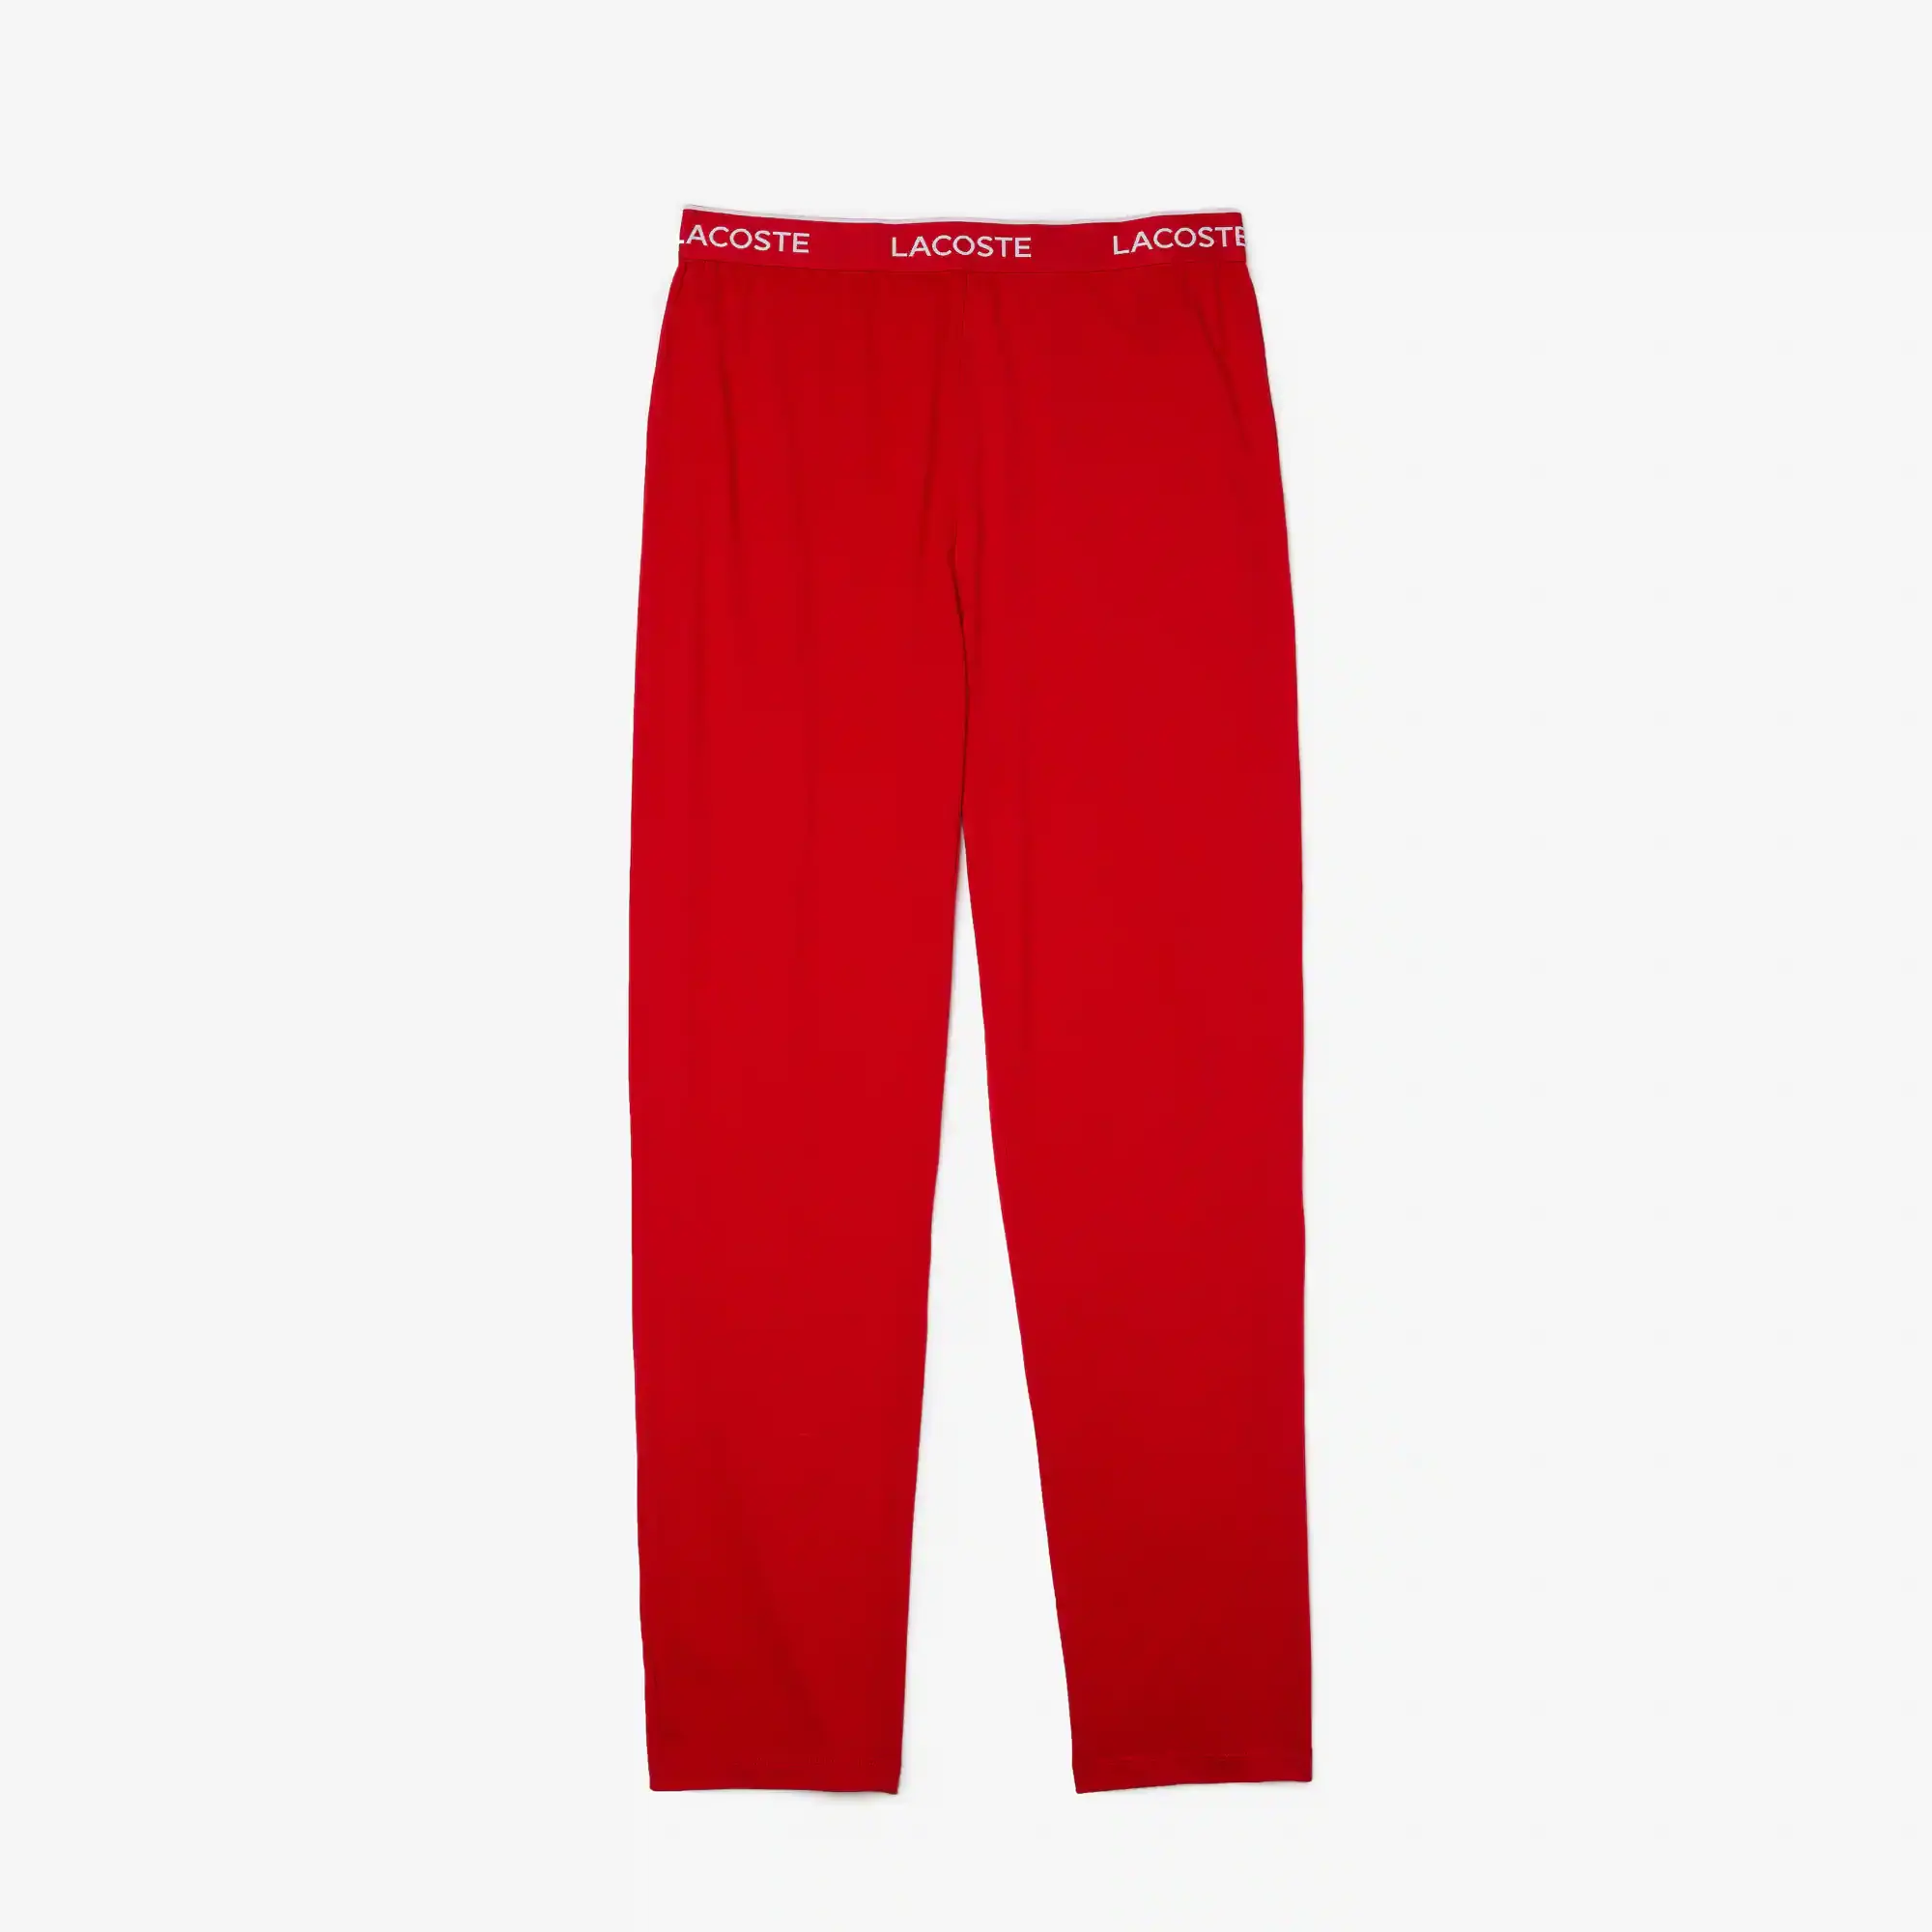 Lacoste Men's Ultra-Soft Cotton Jersey Pajama Bottoms. 1